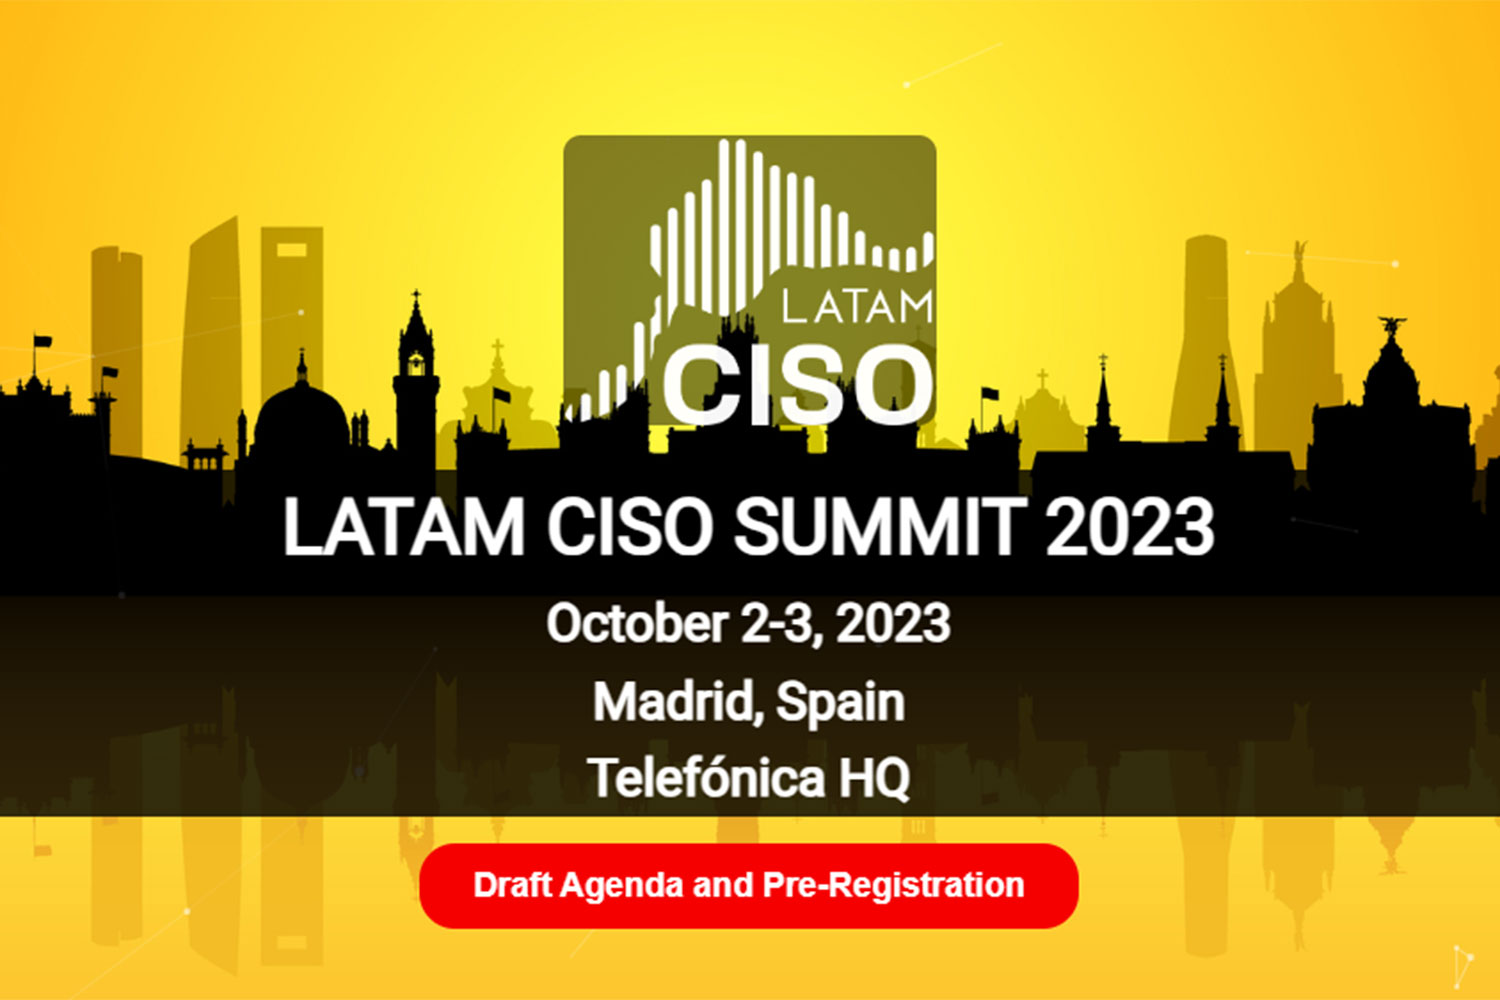 Cartel del evento LATAM CISO Summit 2023